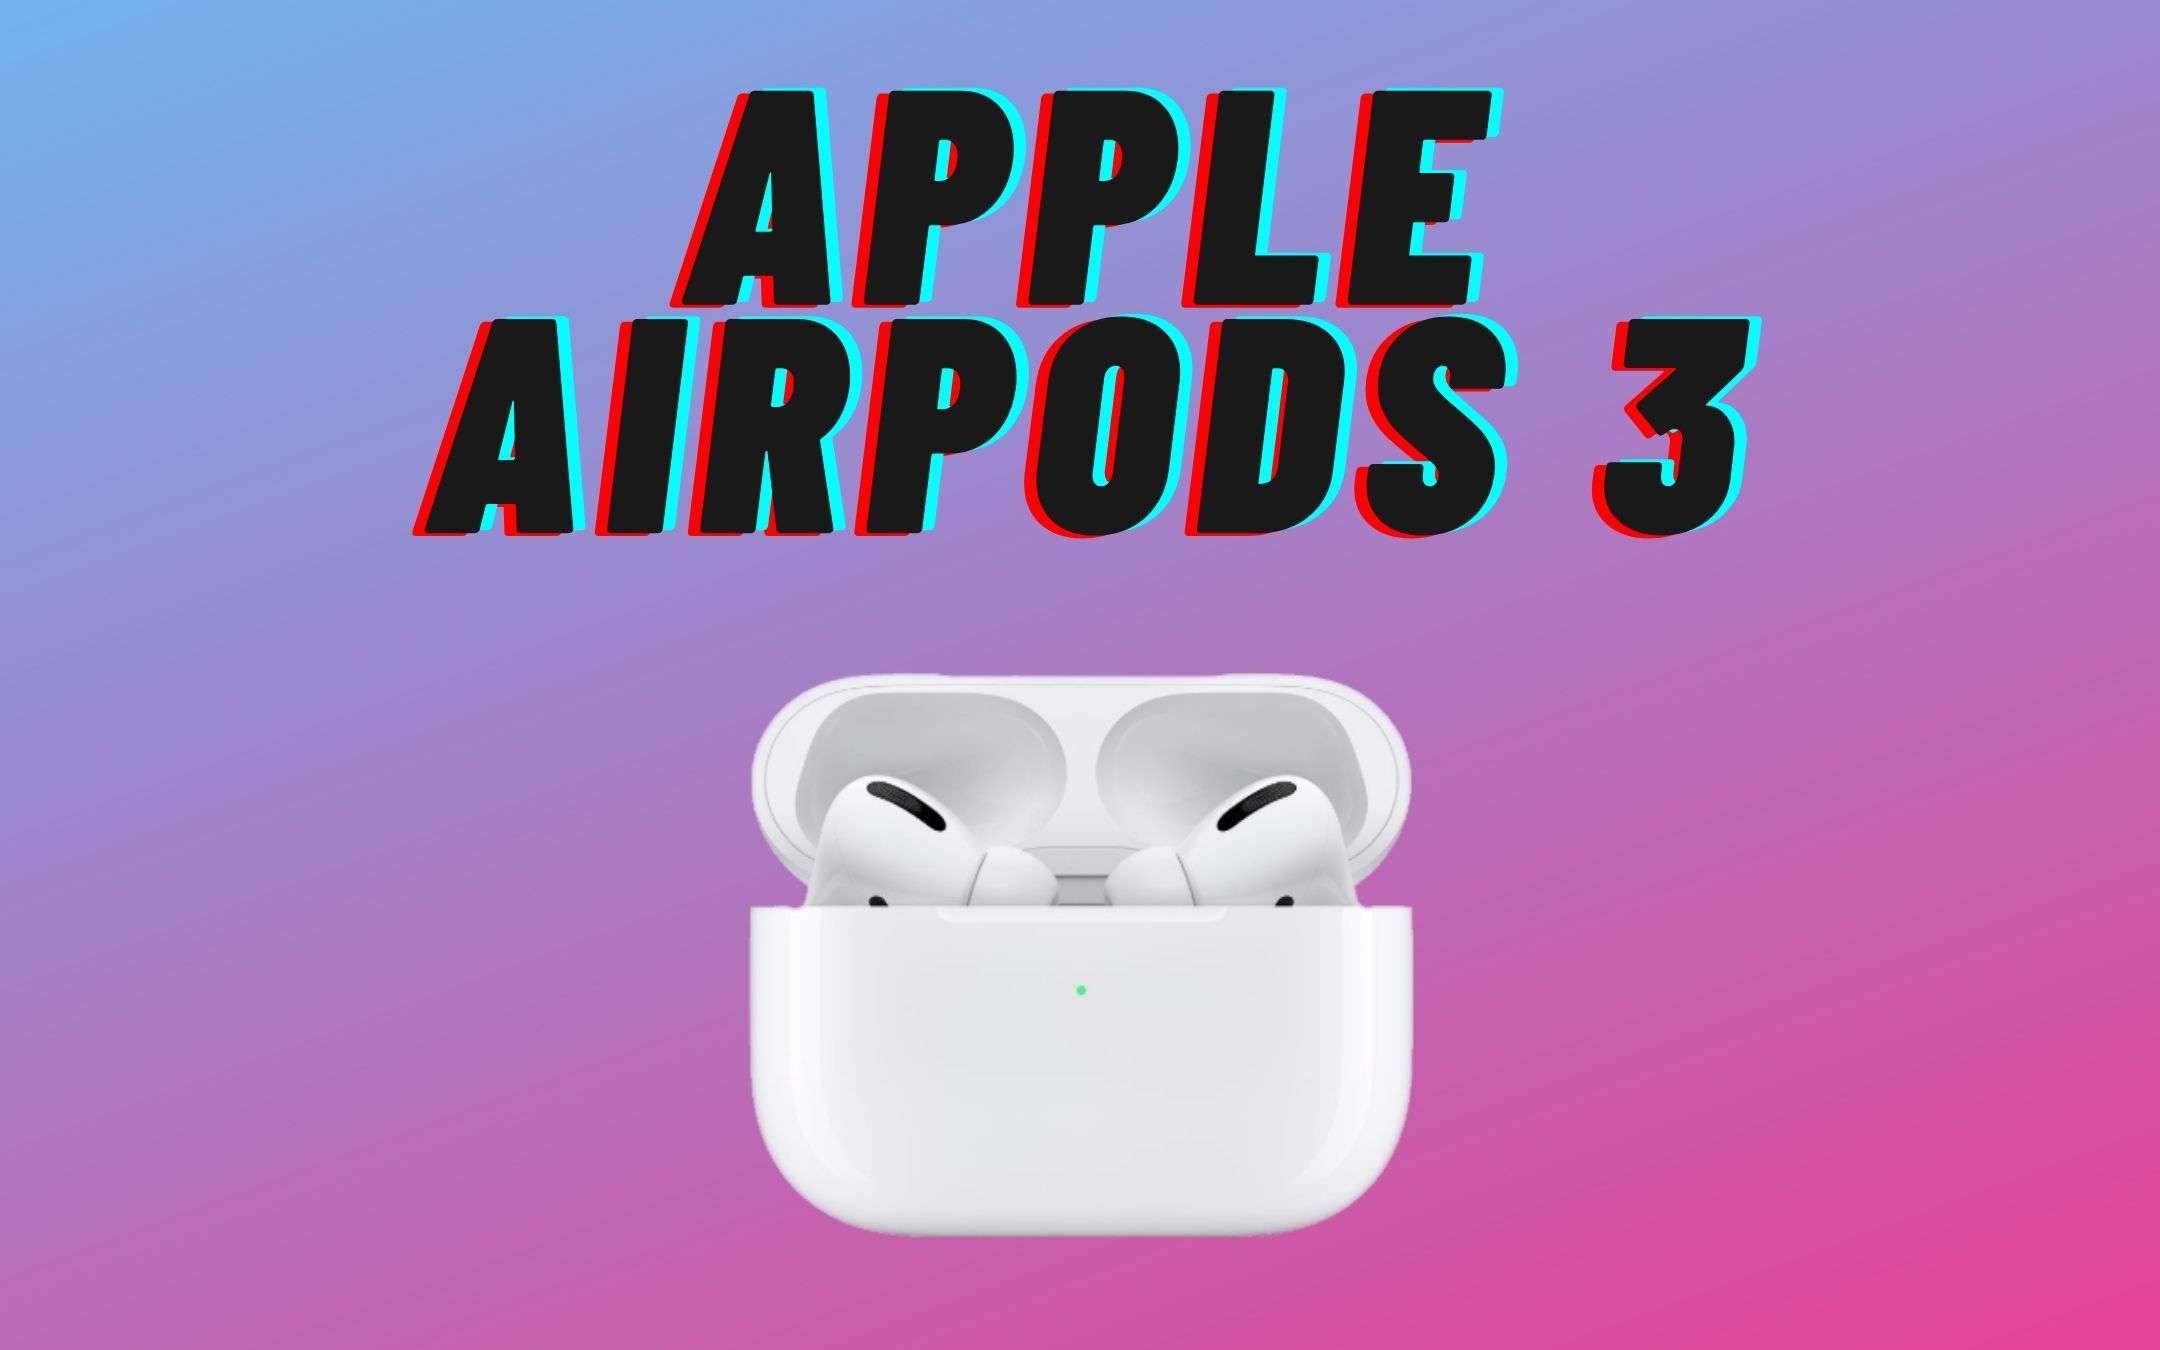 AirPods 3: saranno svelate insieme agli iPhone 13?